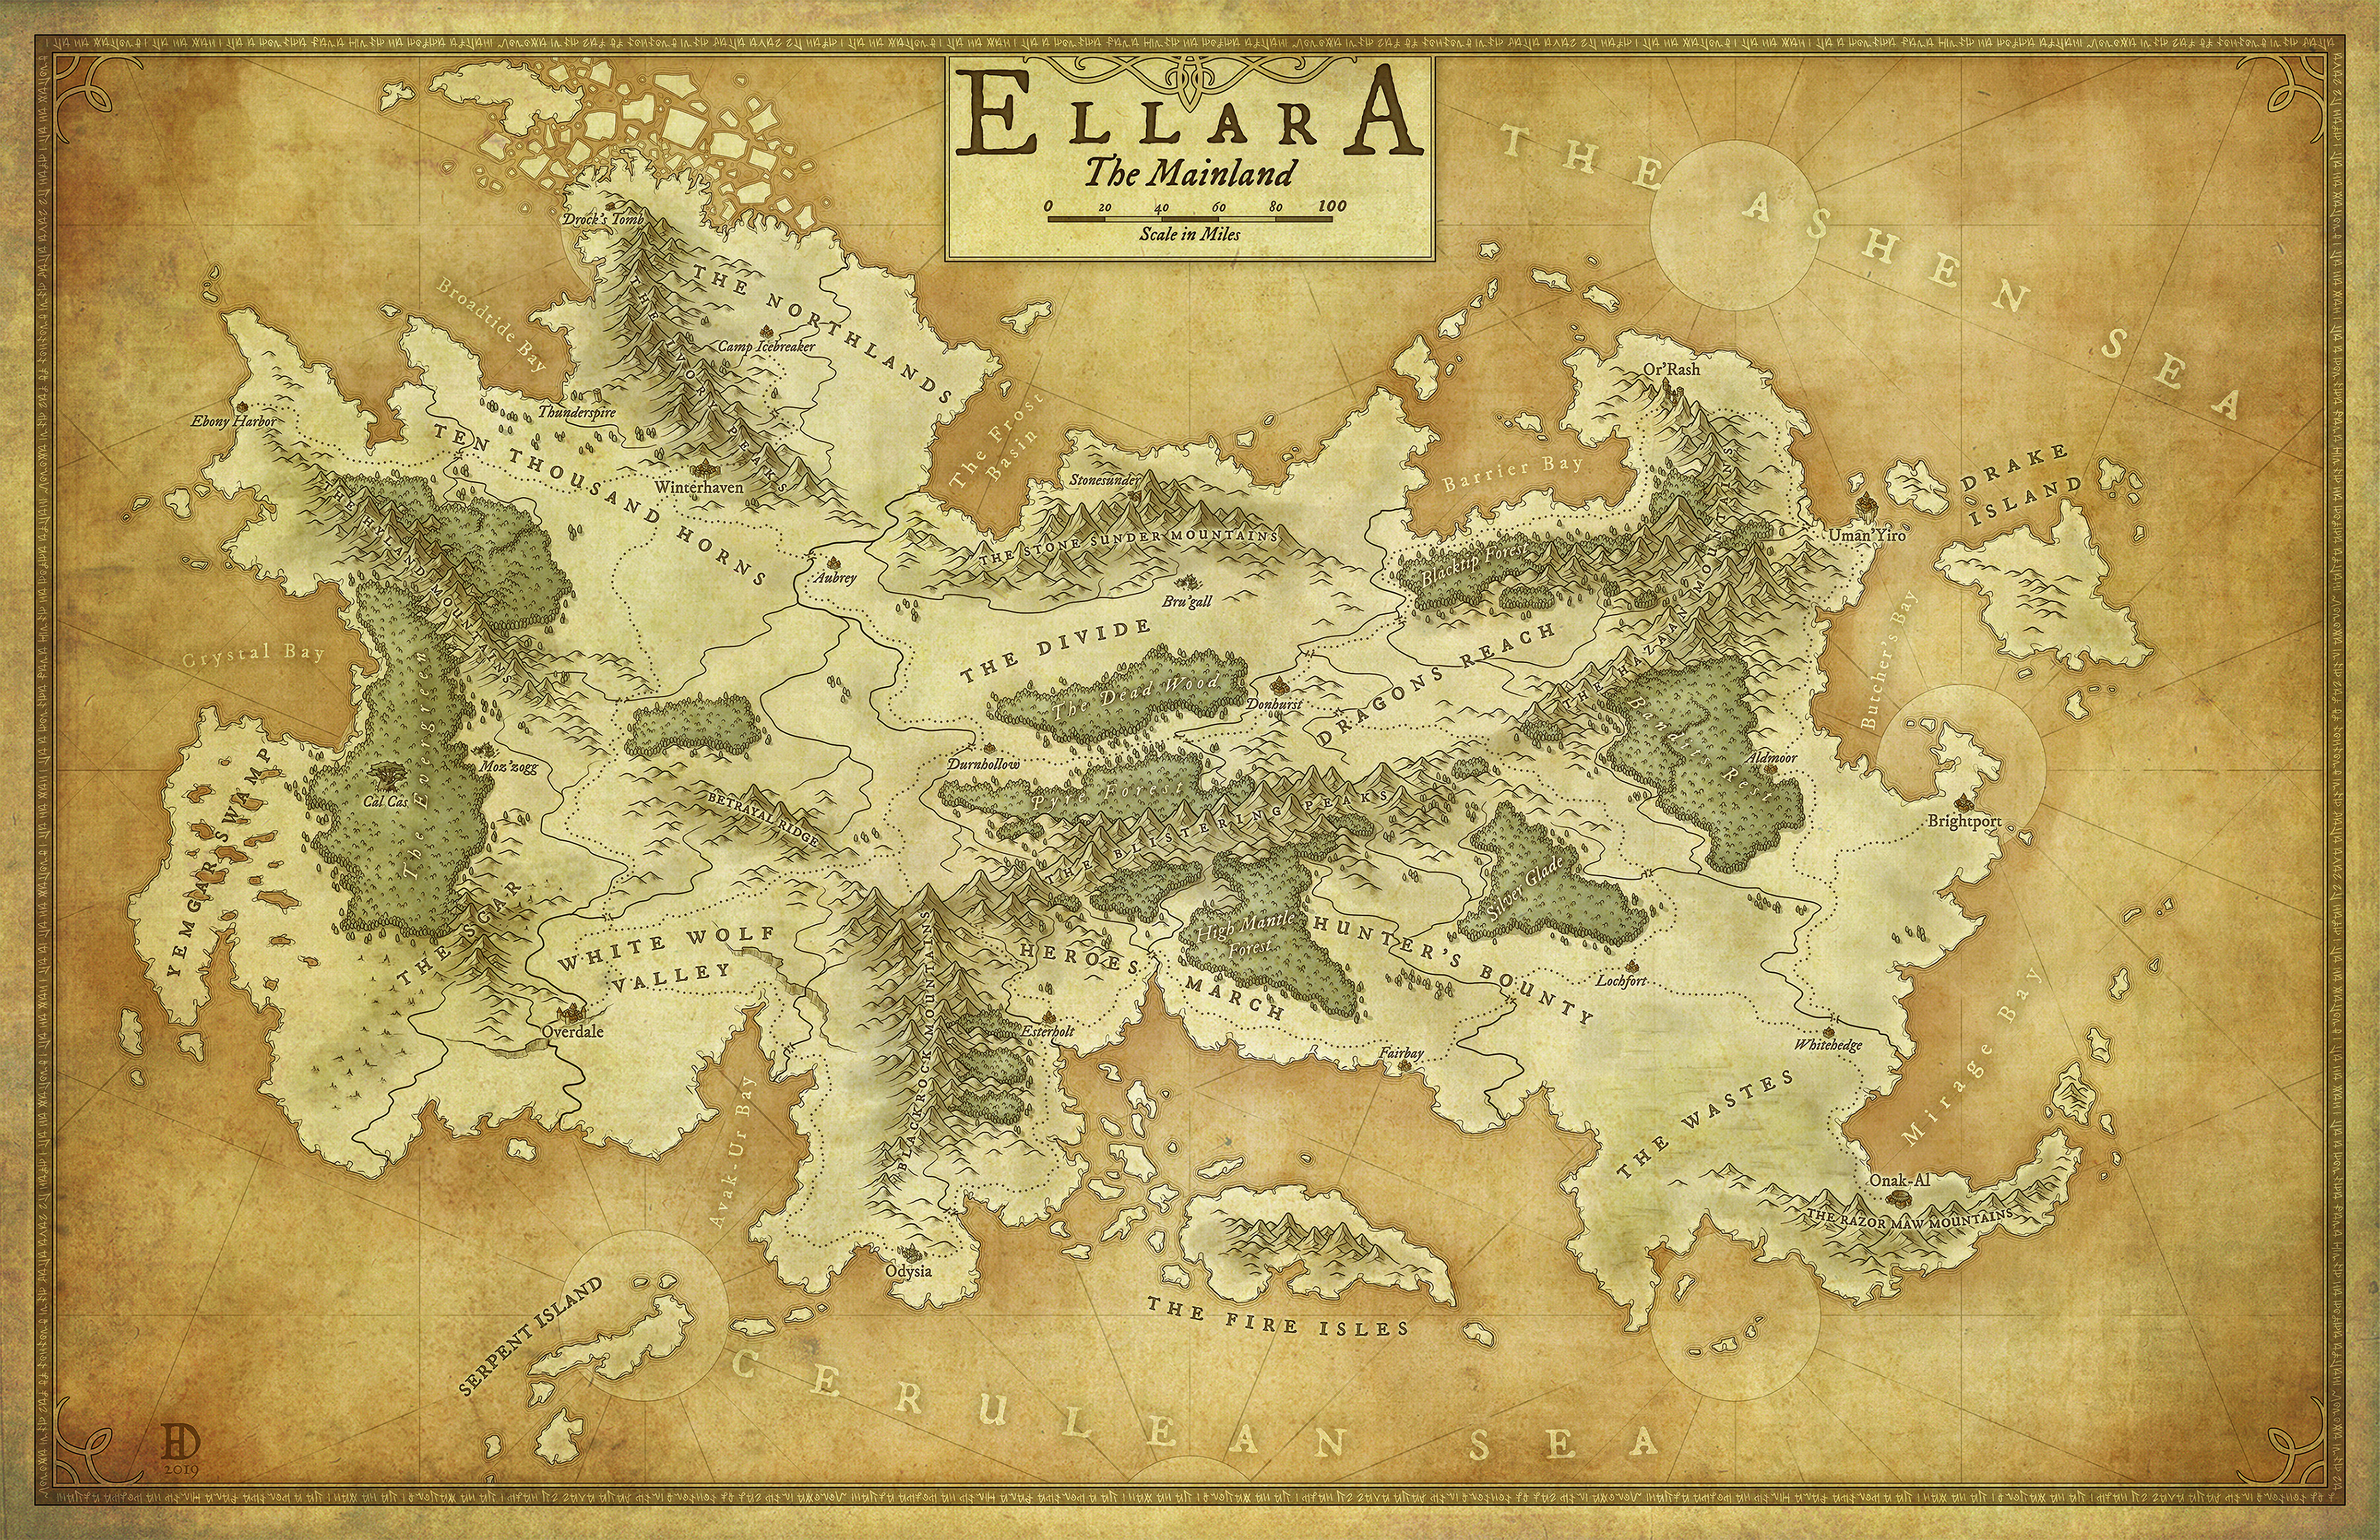 Ellara, "The Mainland" cover